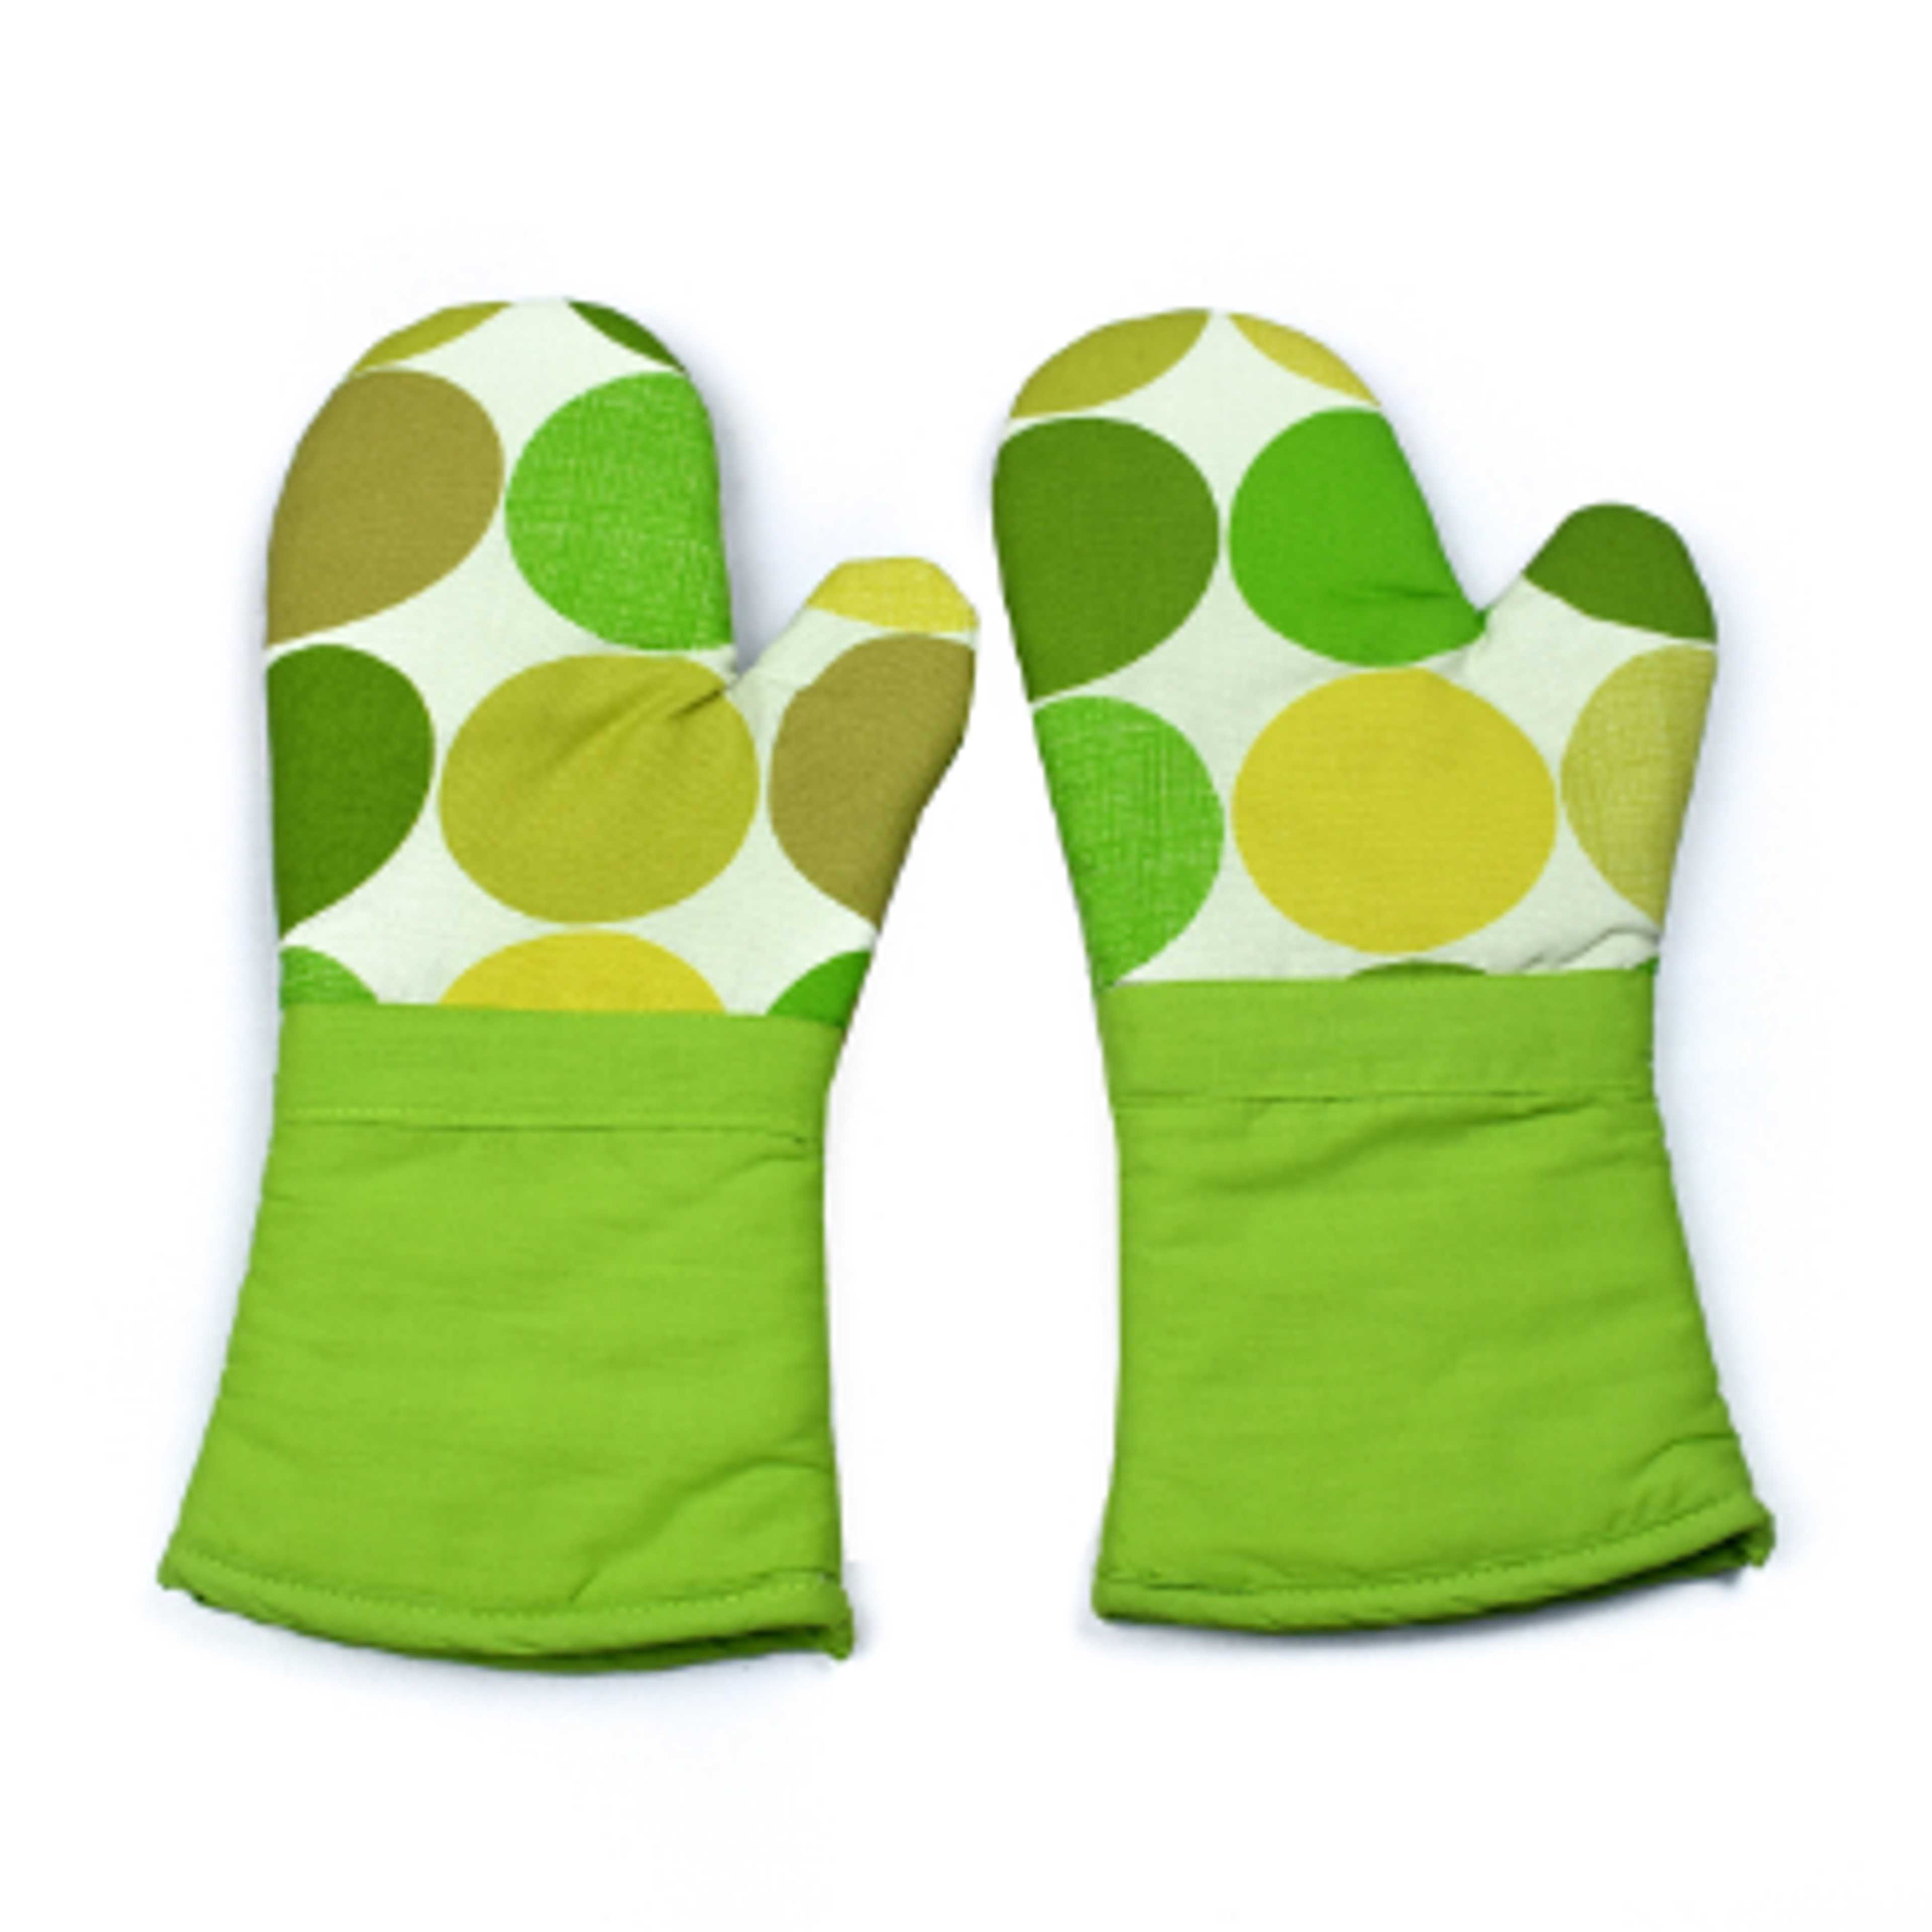 SOG 134 Kitchen Mitts, Cotton Glove Pair Parrot Green Polka Dot